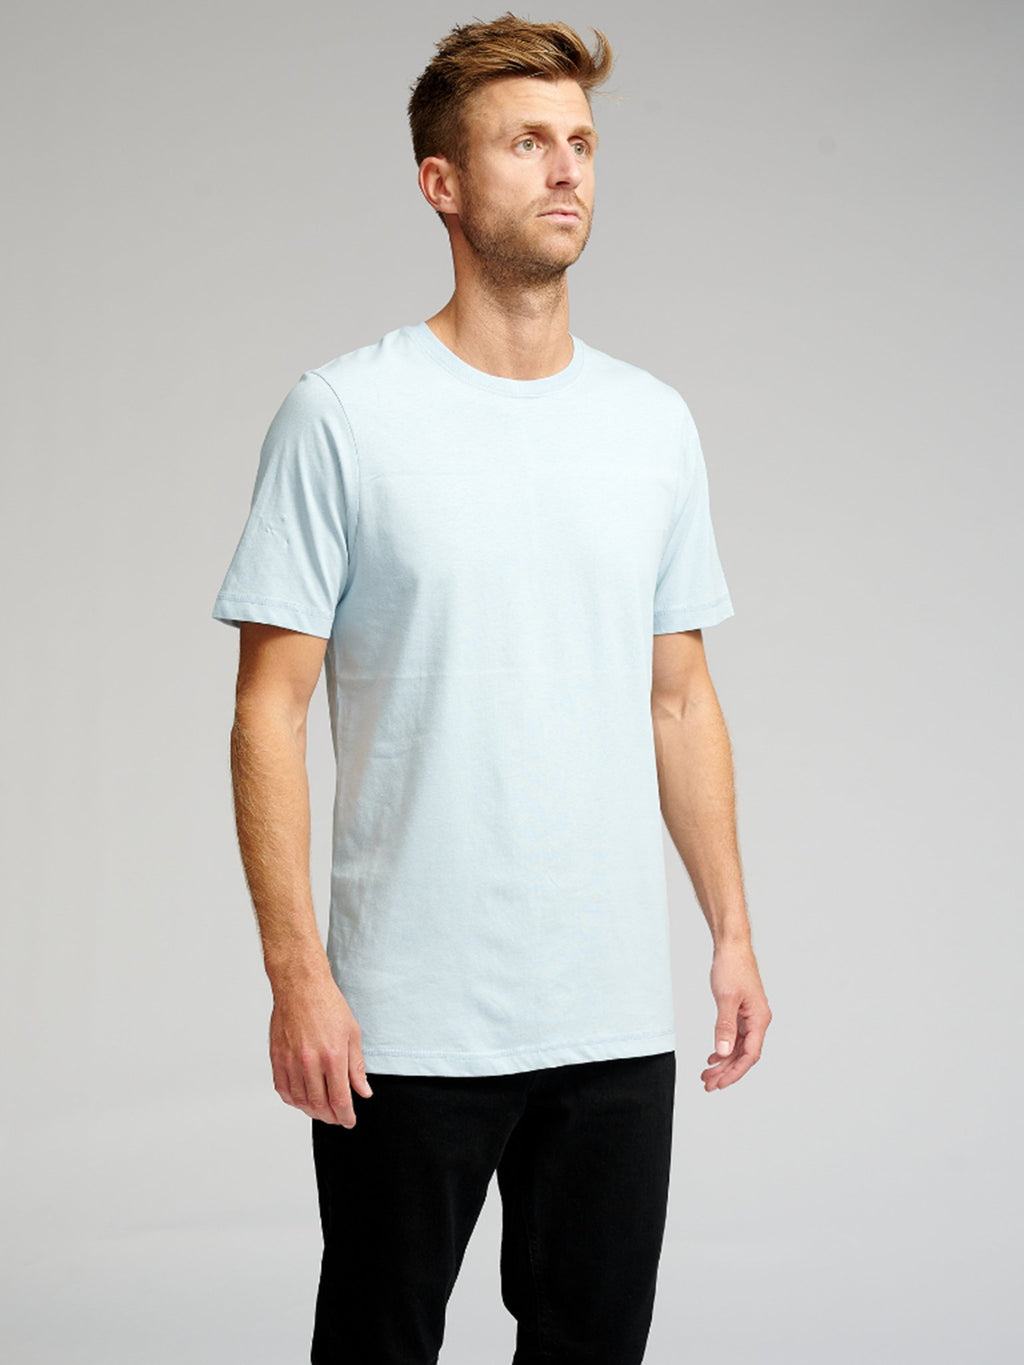 Camiseta básica orgánica - azul claro